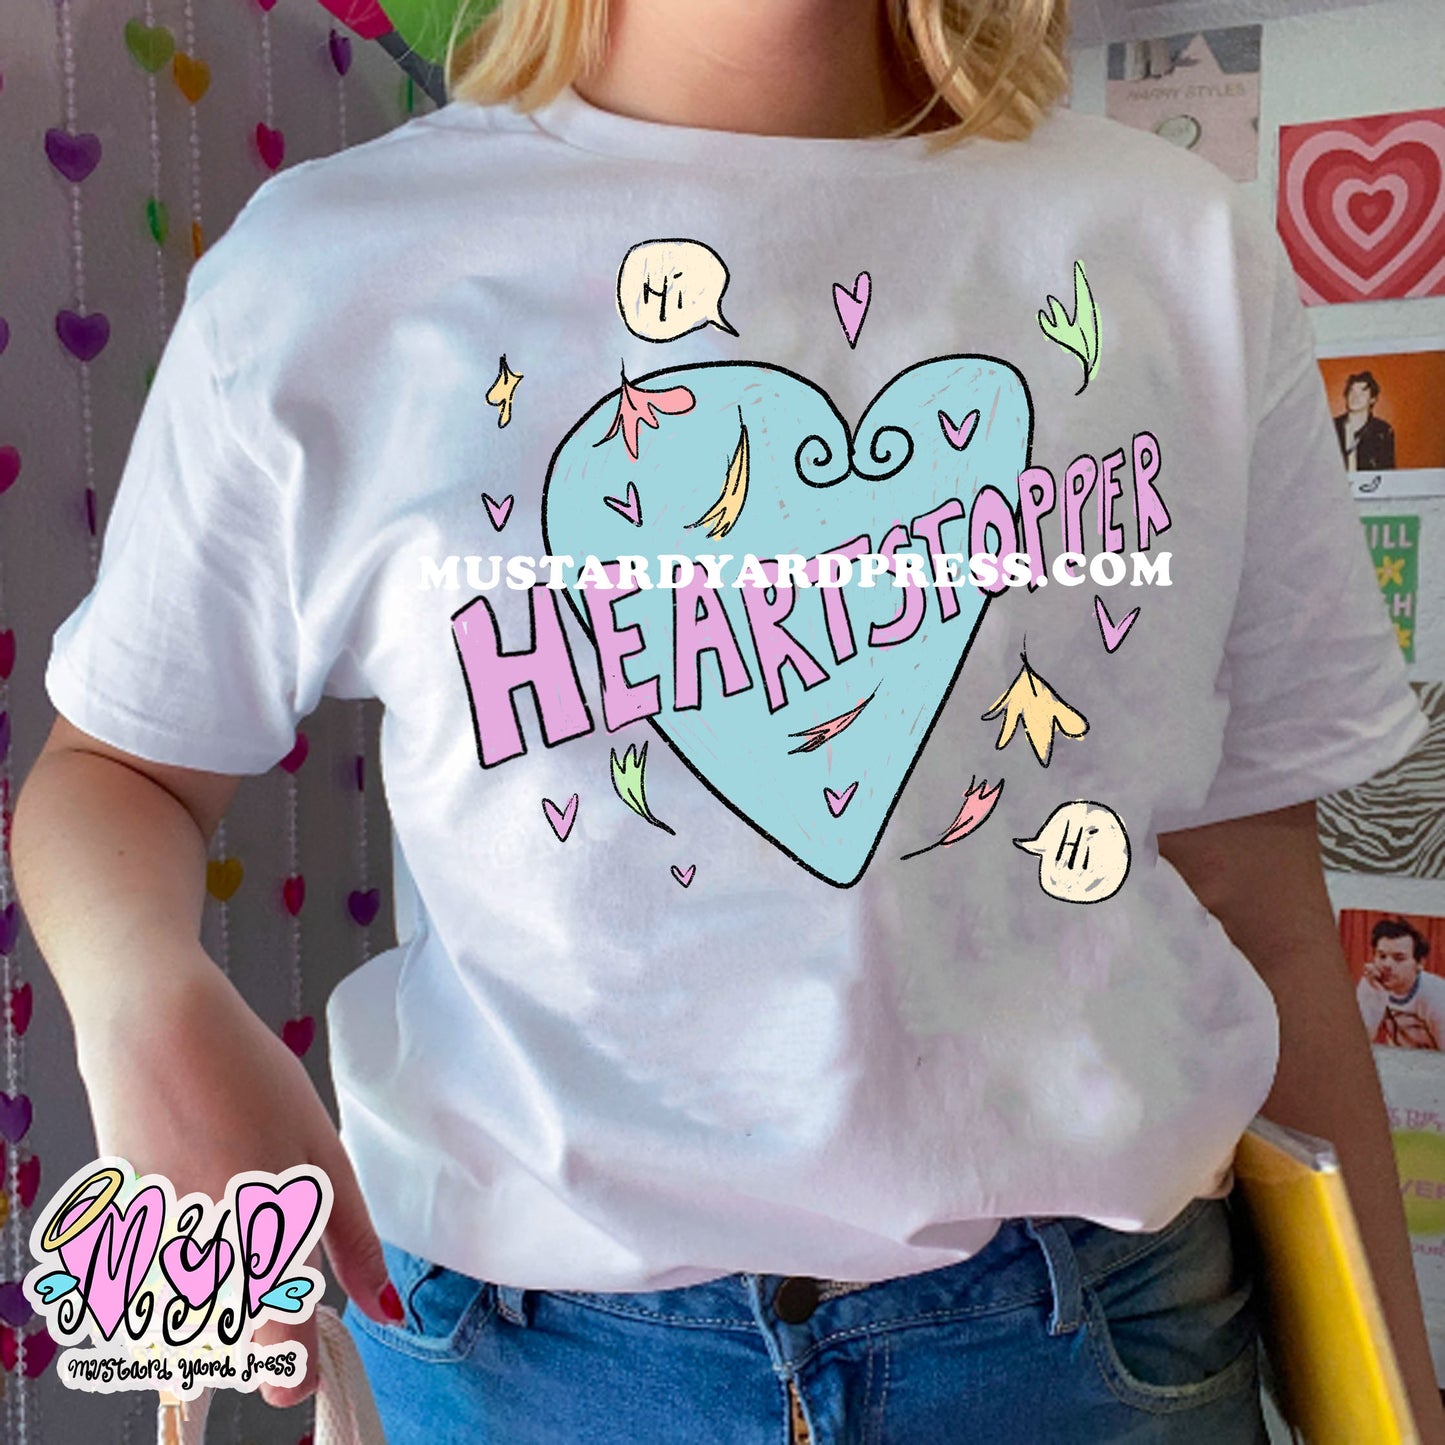 heartstop logo t-shirt